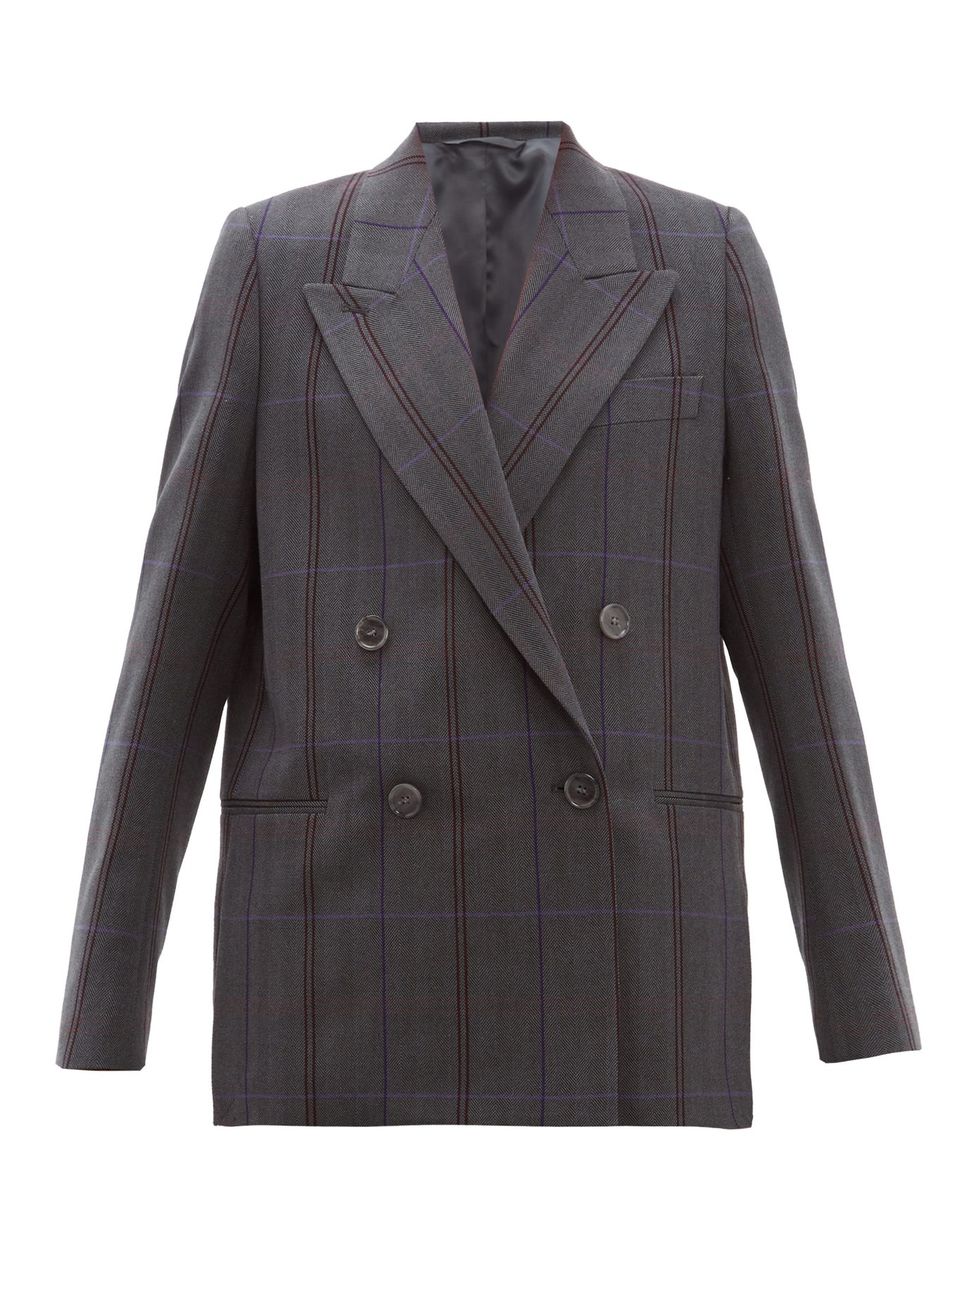 Clothing, Outerwear, Blazer, Jacket, Suit, Brown, Sleeve, Formal wear, Coat, Beige, 